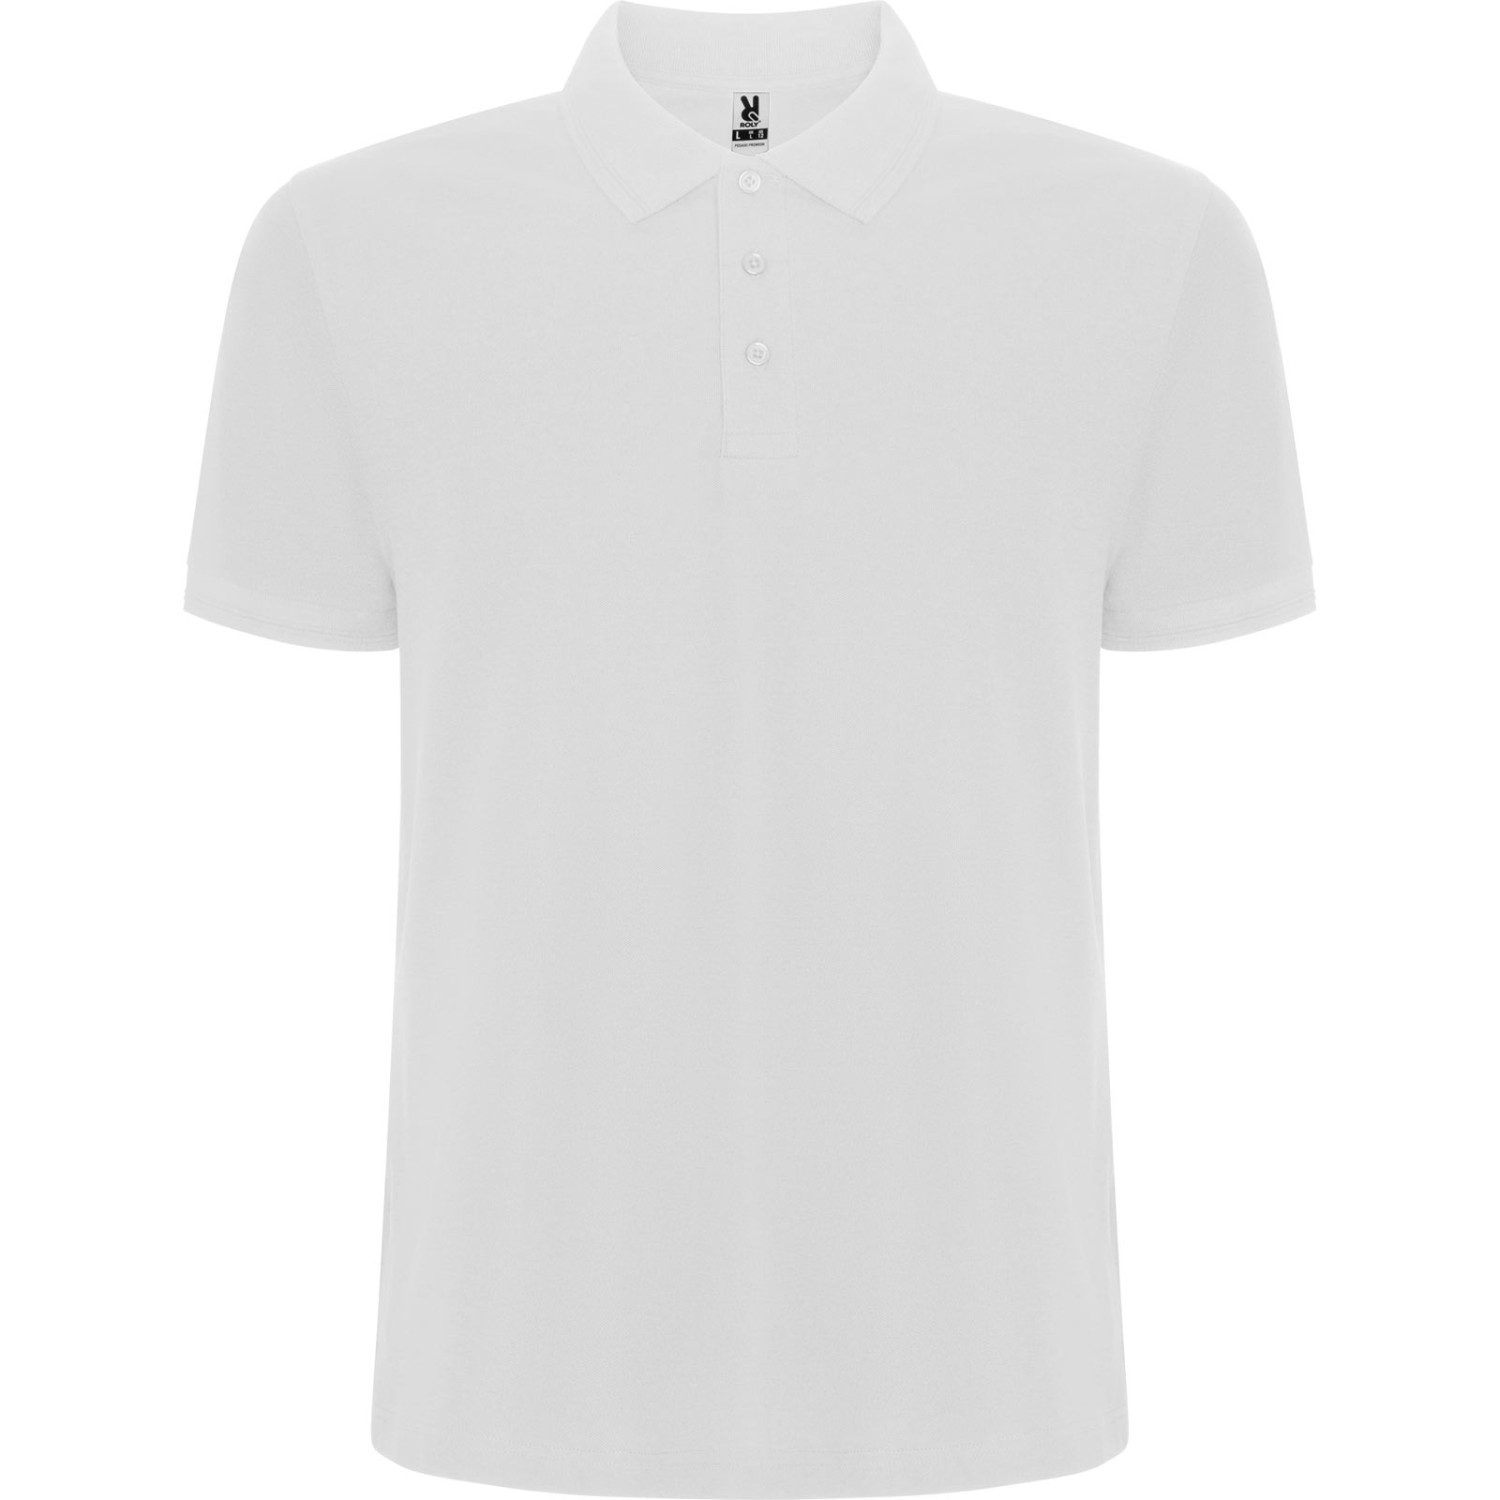 0. Foto Polo Shirt PEGASO Premium mit Logo Text Druck (Farbe: weiß Größe: S)